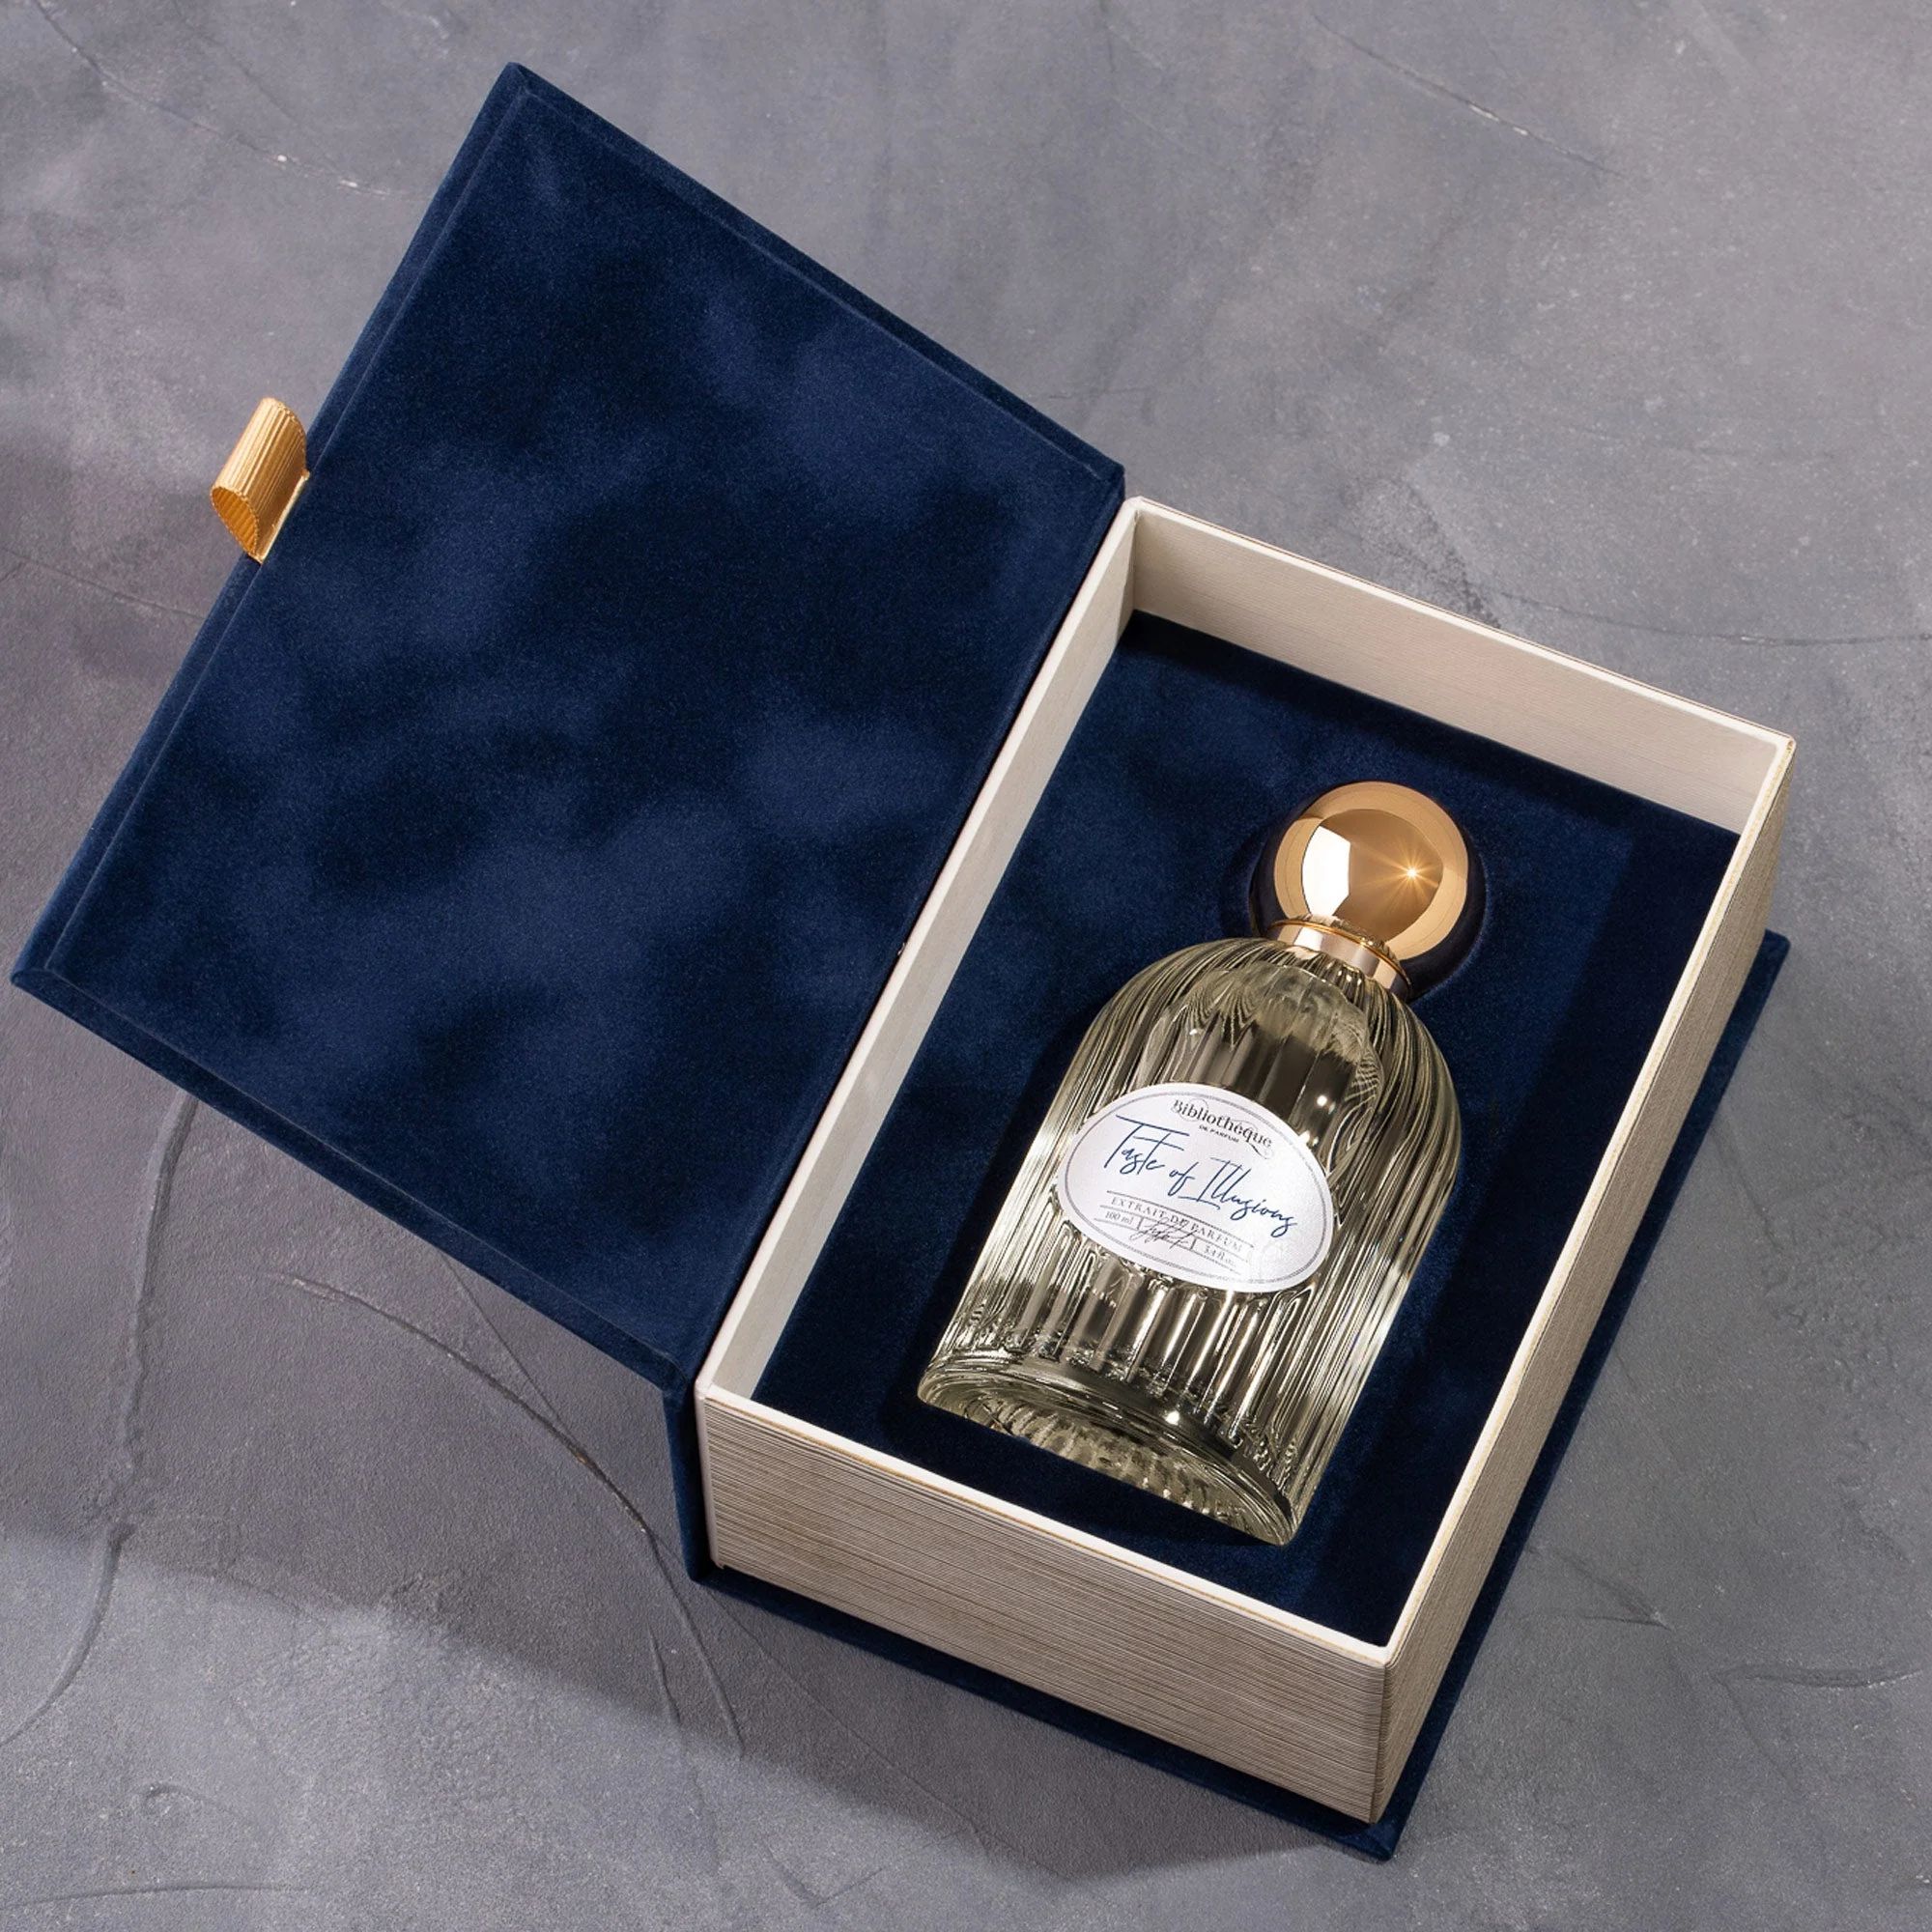 Taste of Illusions Bibliothèque de Parfum perfume - a fragrance for ...